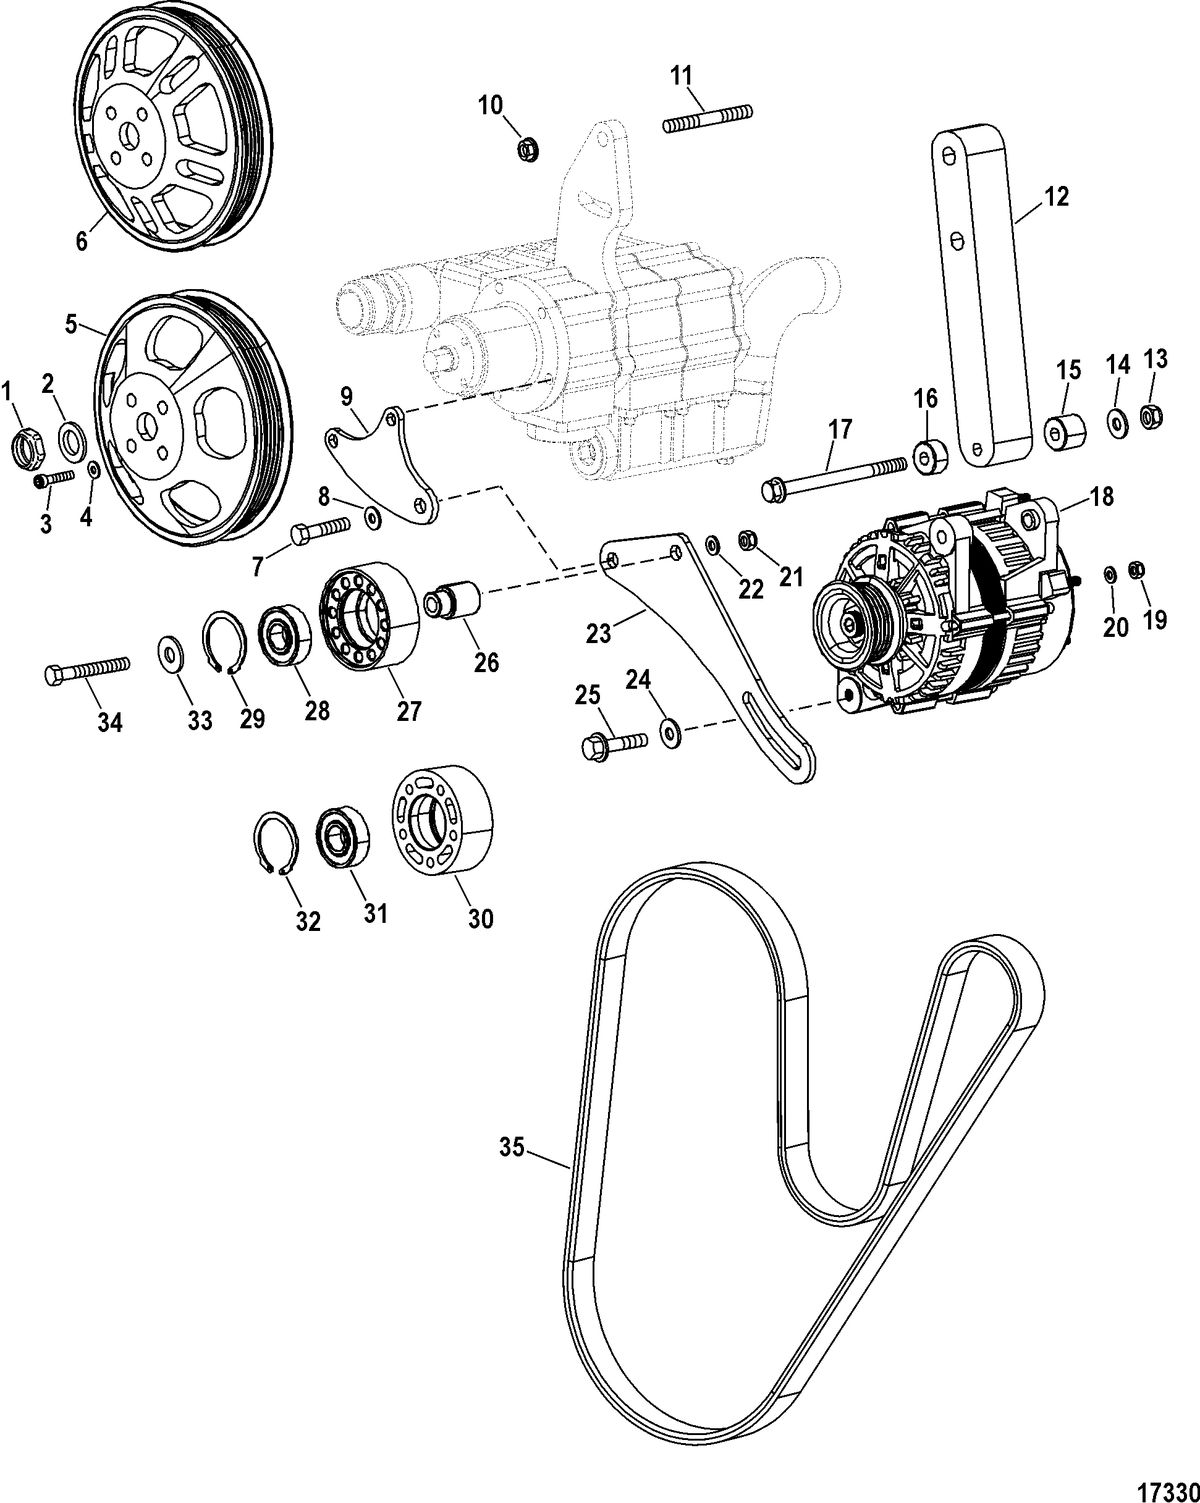 RACE STERNDRIVE 1075 SCI Alternator And Sea Water Pump Mounting(Design I)